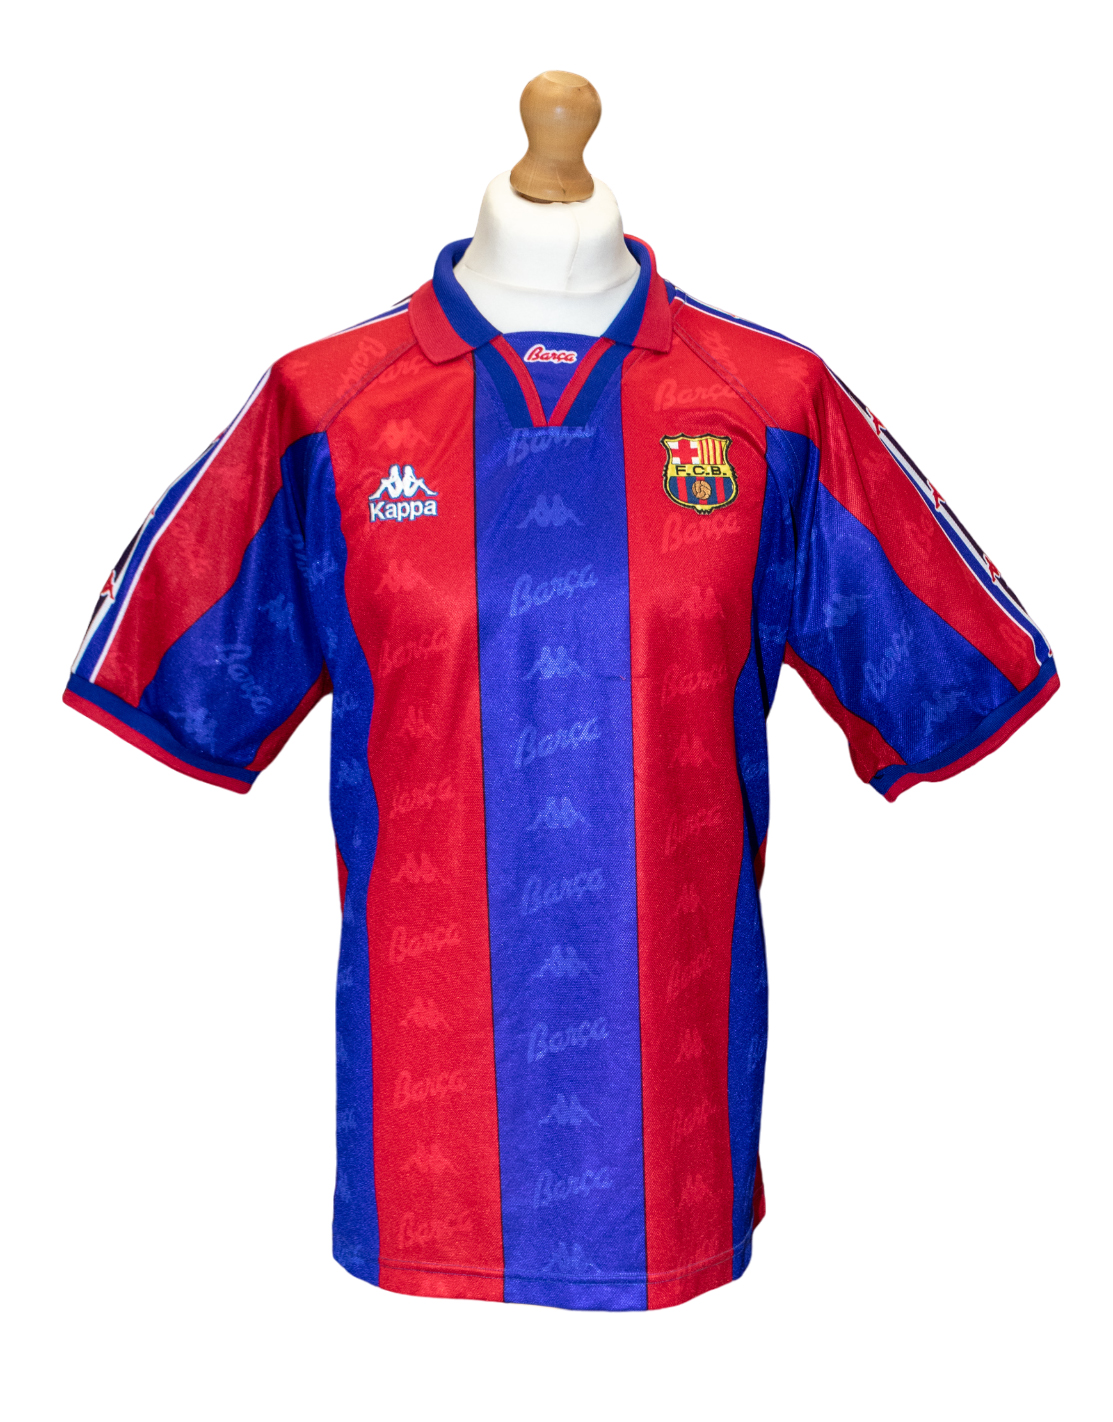 F.C. Barcelona: An F.C. Barcelona, match worn football shirt, worn by Ronaldo in the 1995-1996